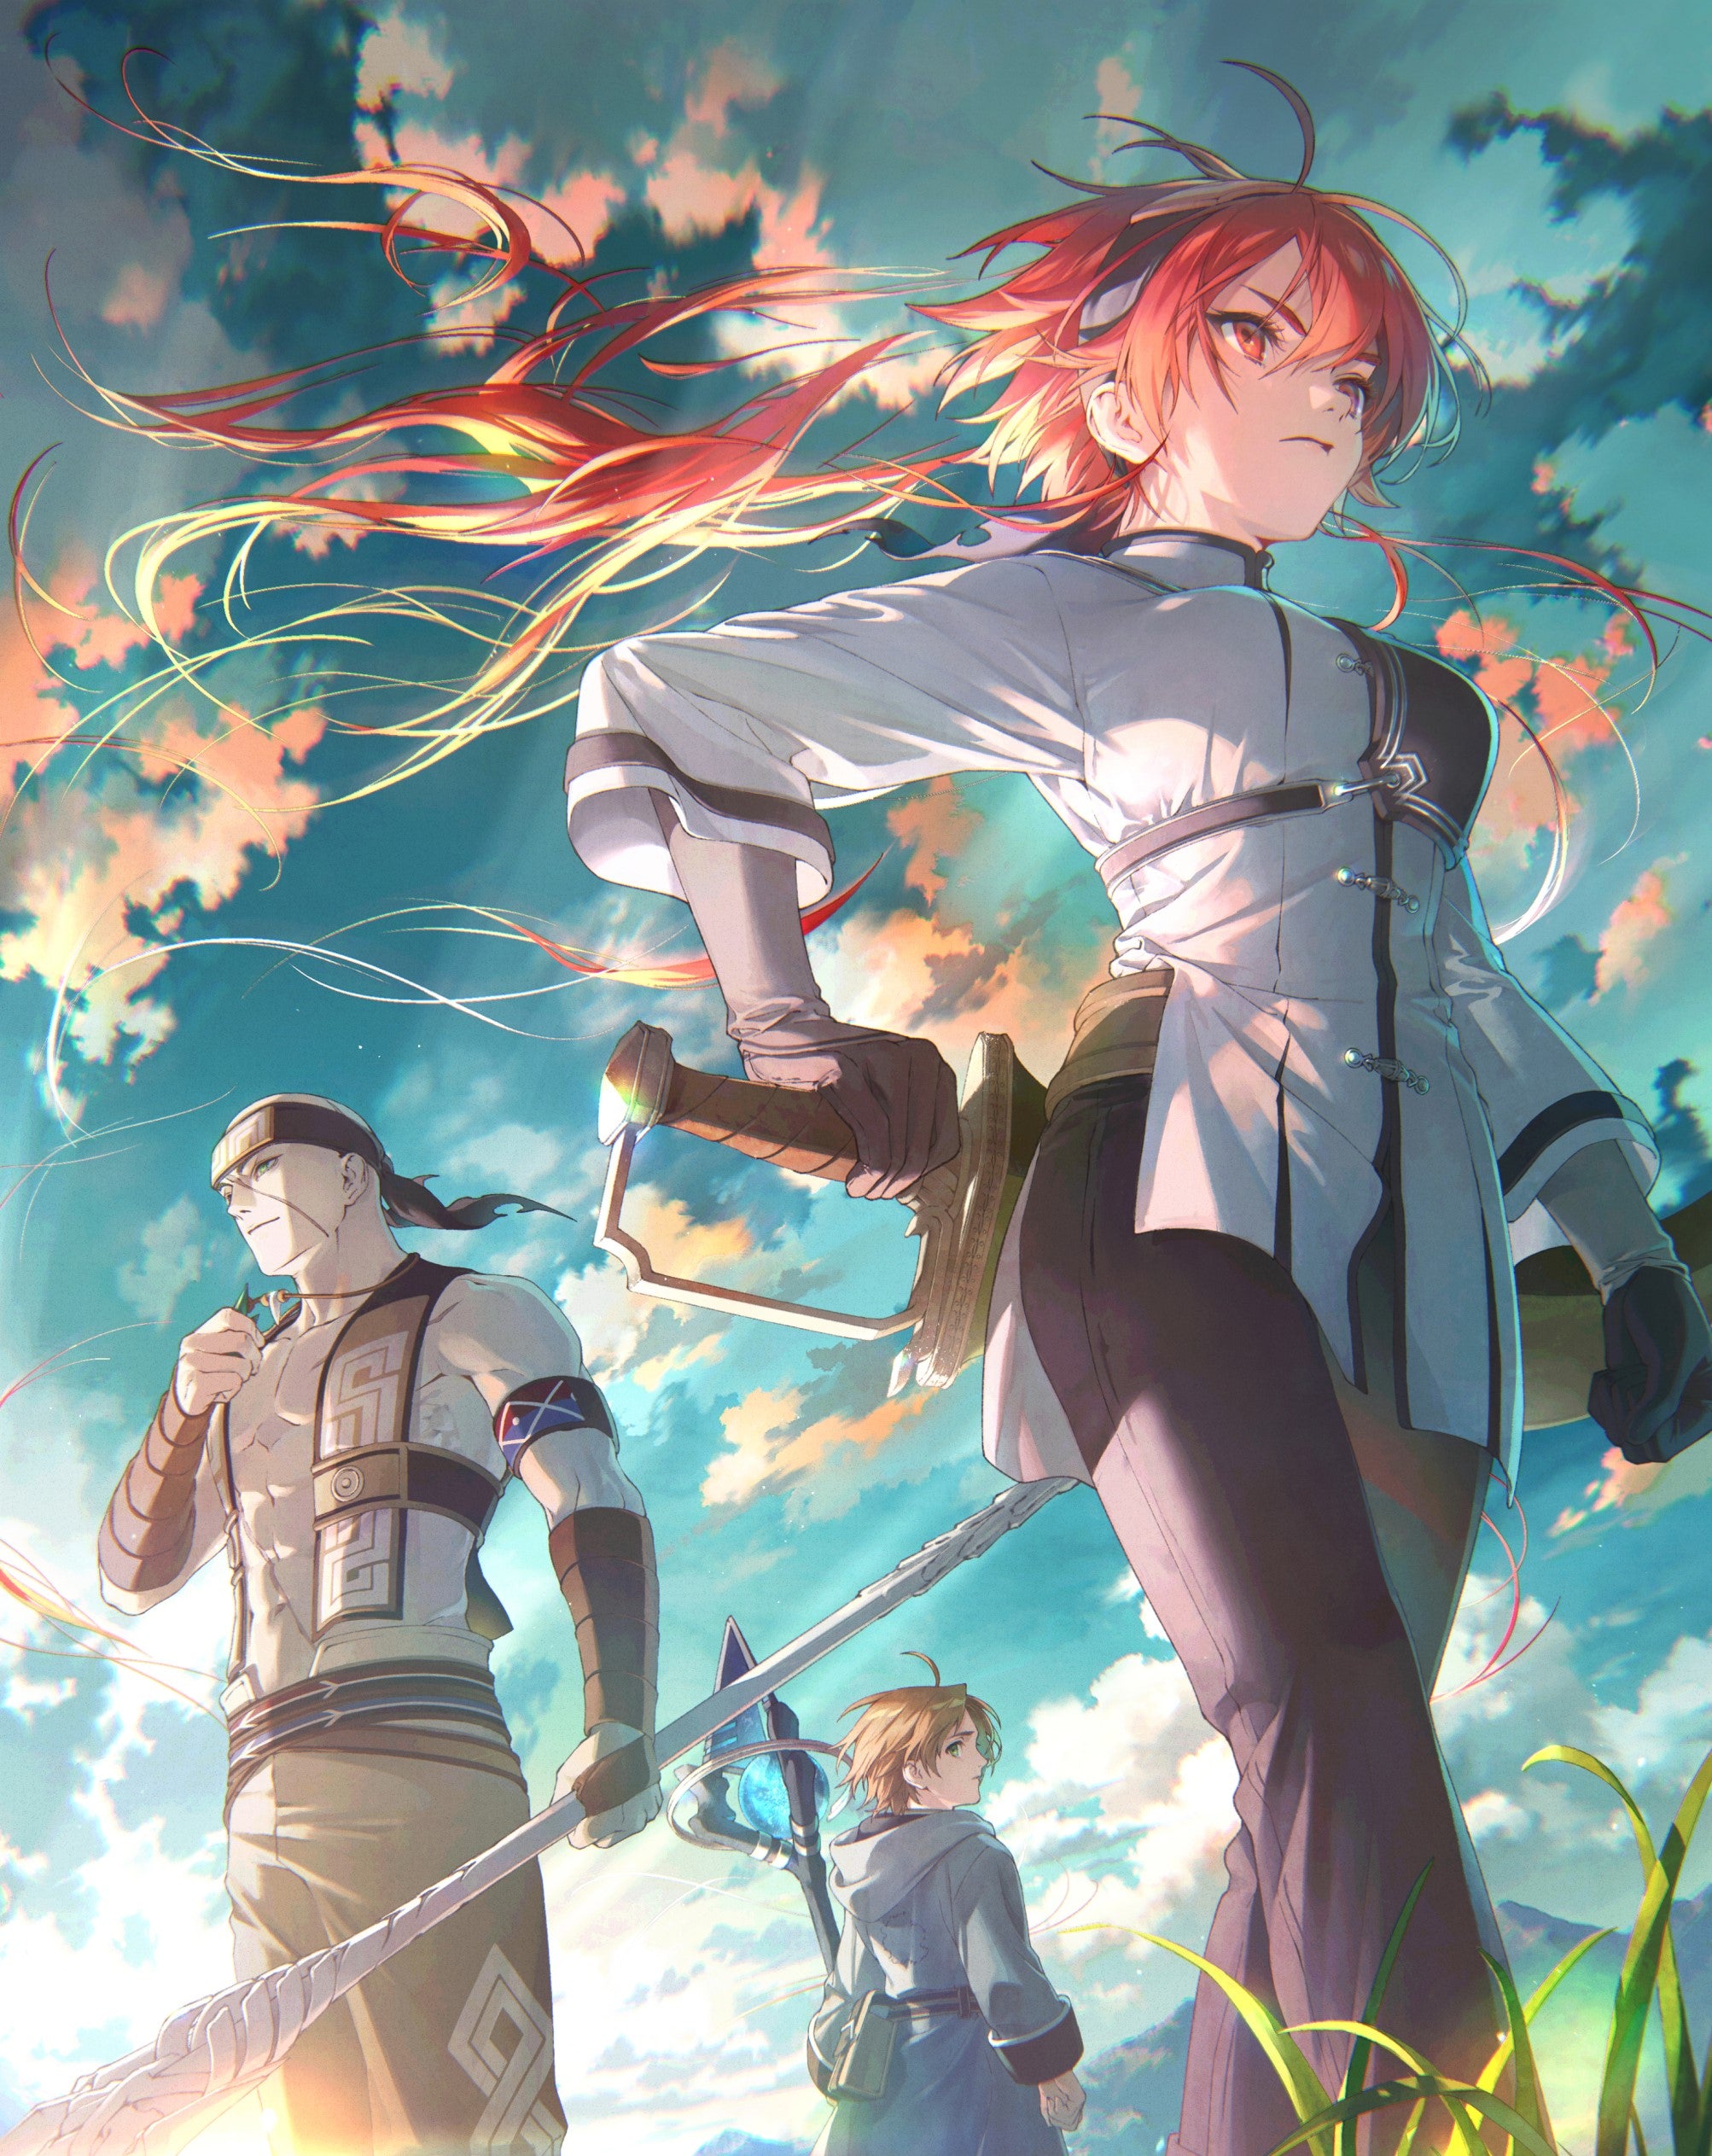 News: Fall 2015 Anime Based on Light Novels – English Light Novels